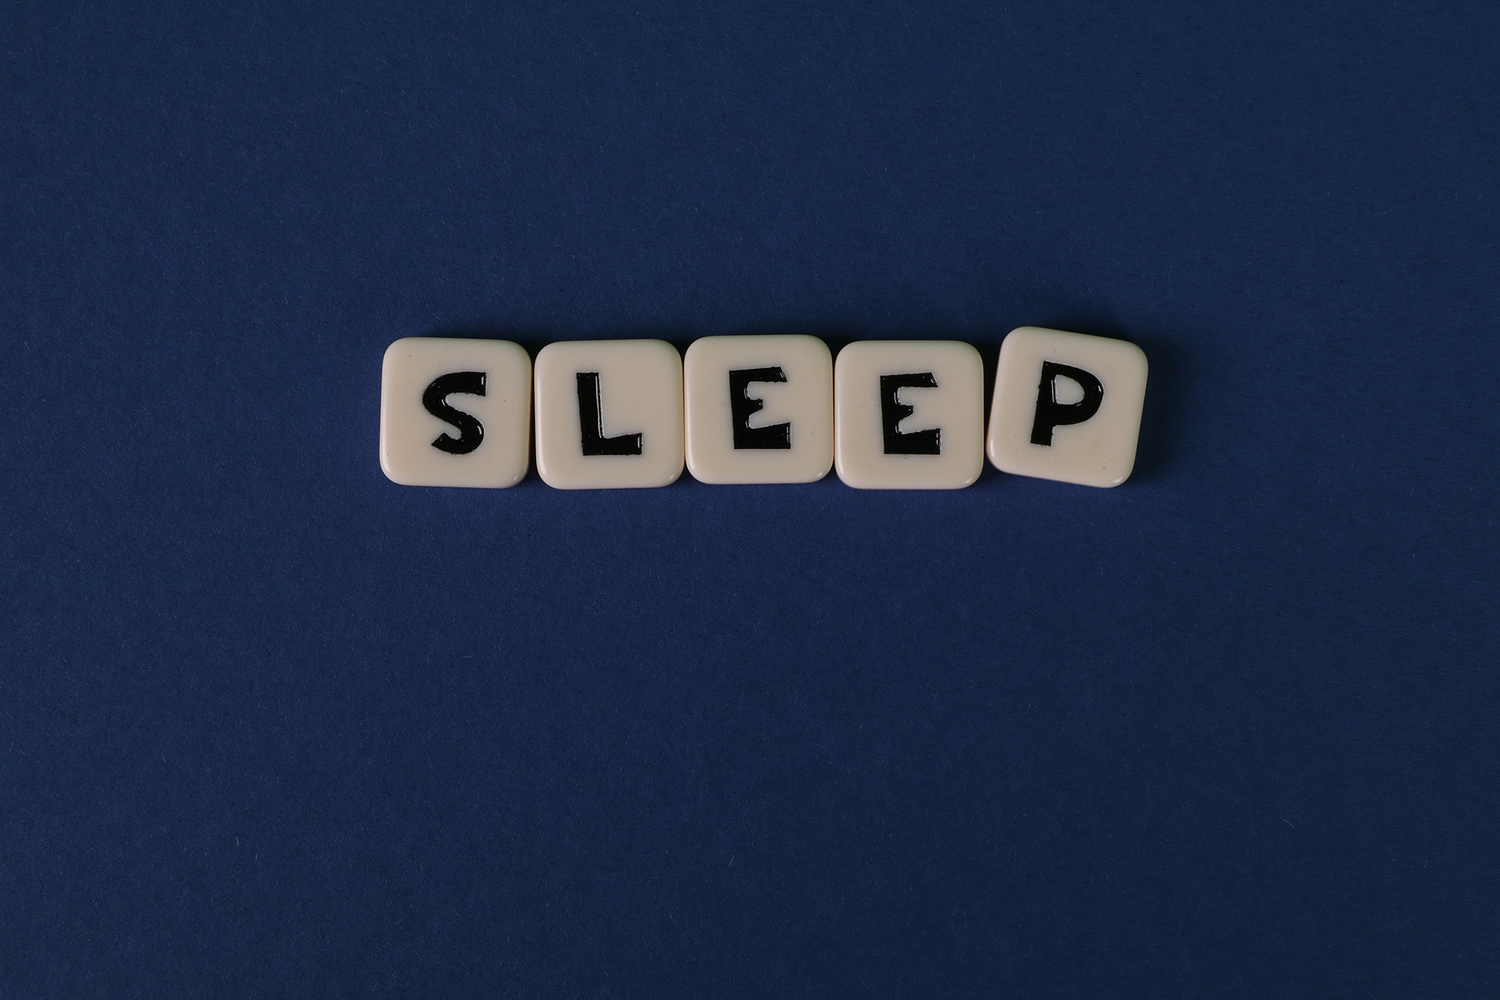 Sleep: Not for the Weak